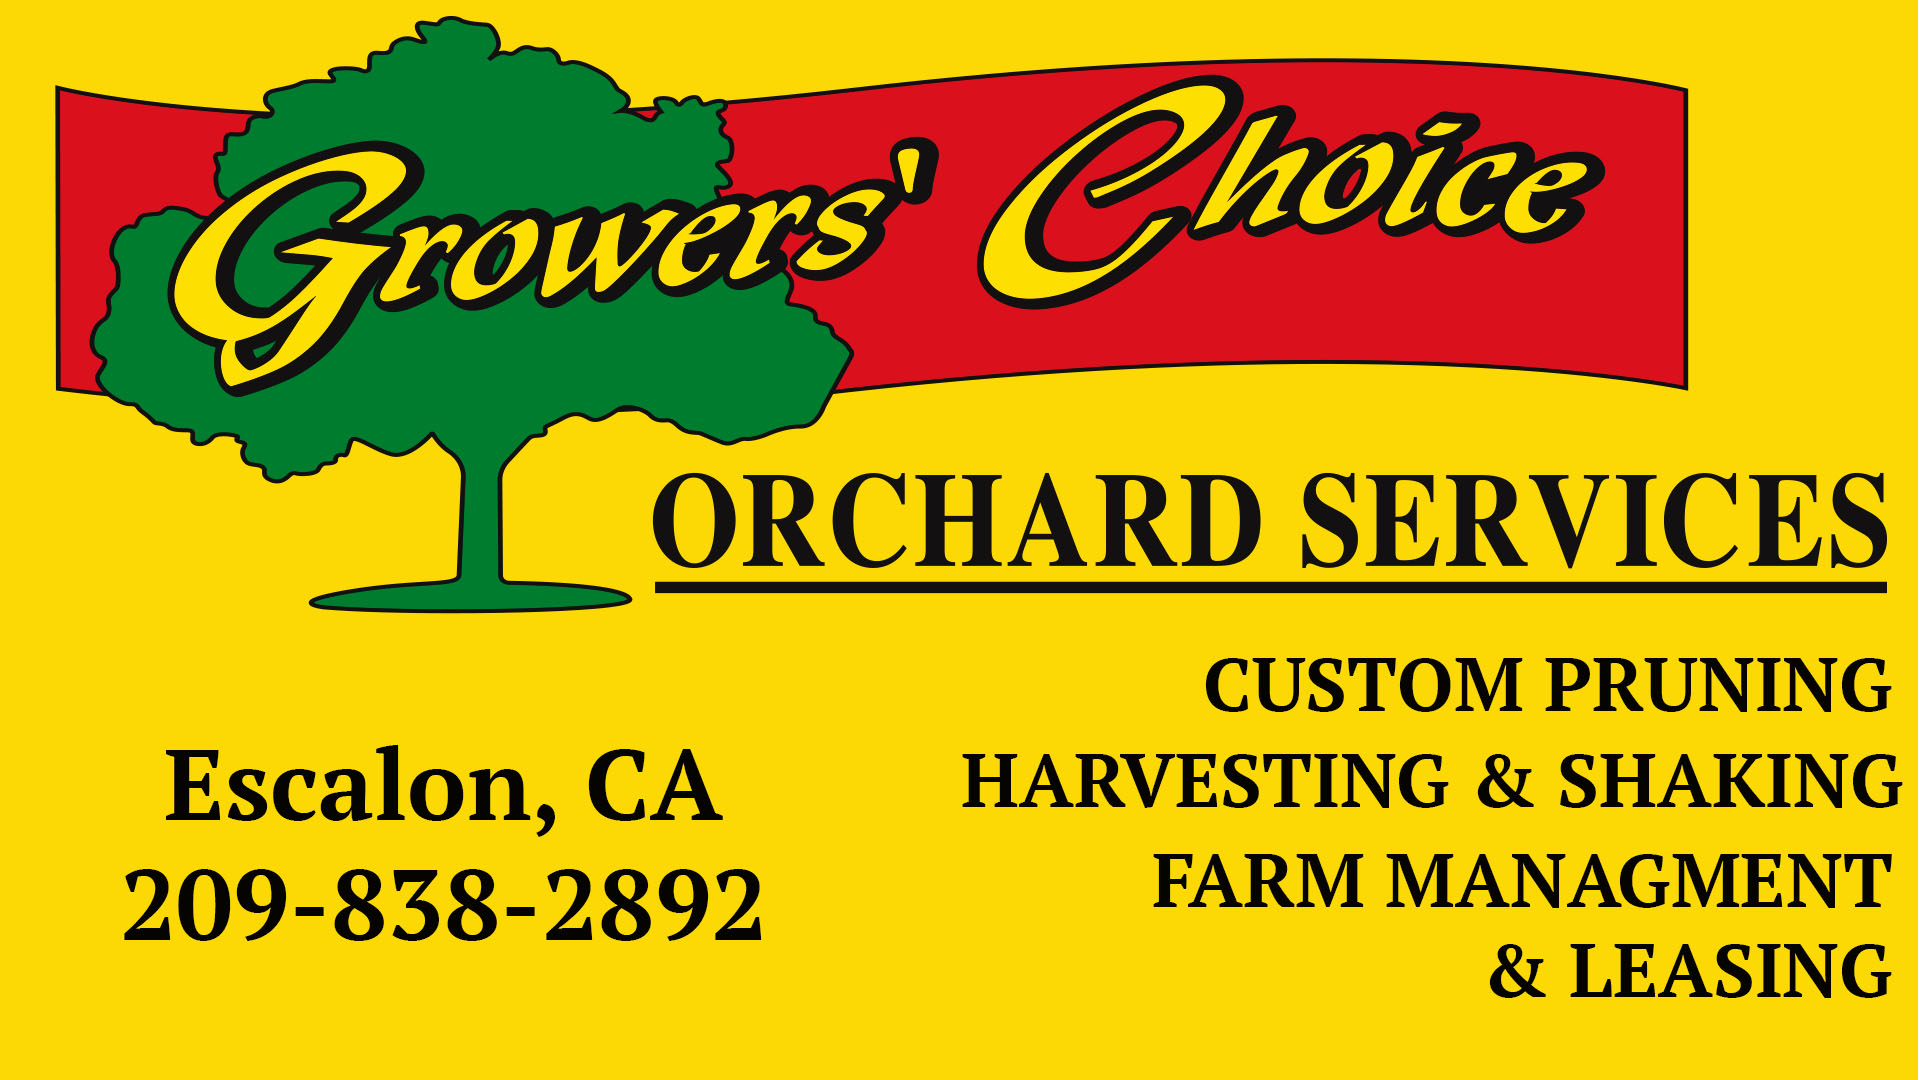 Grower's Choice logo